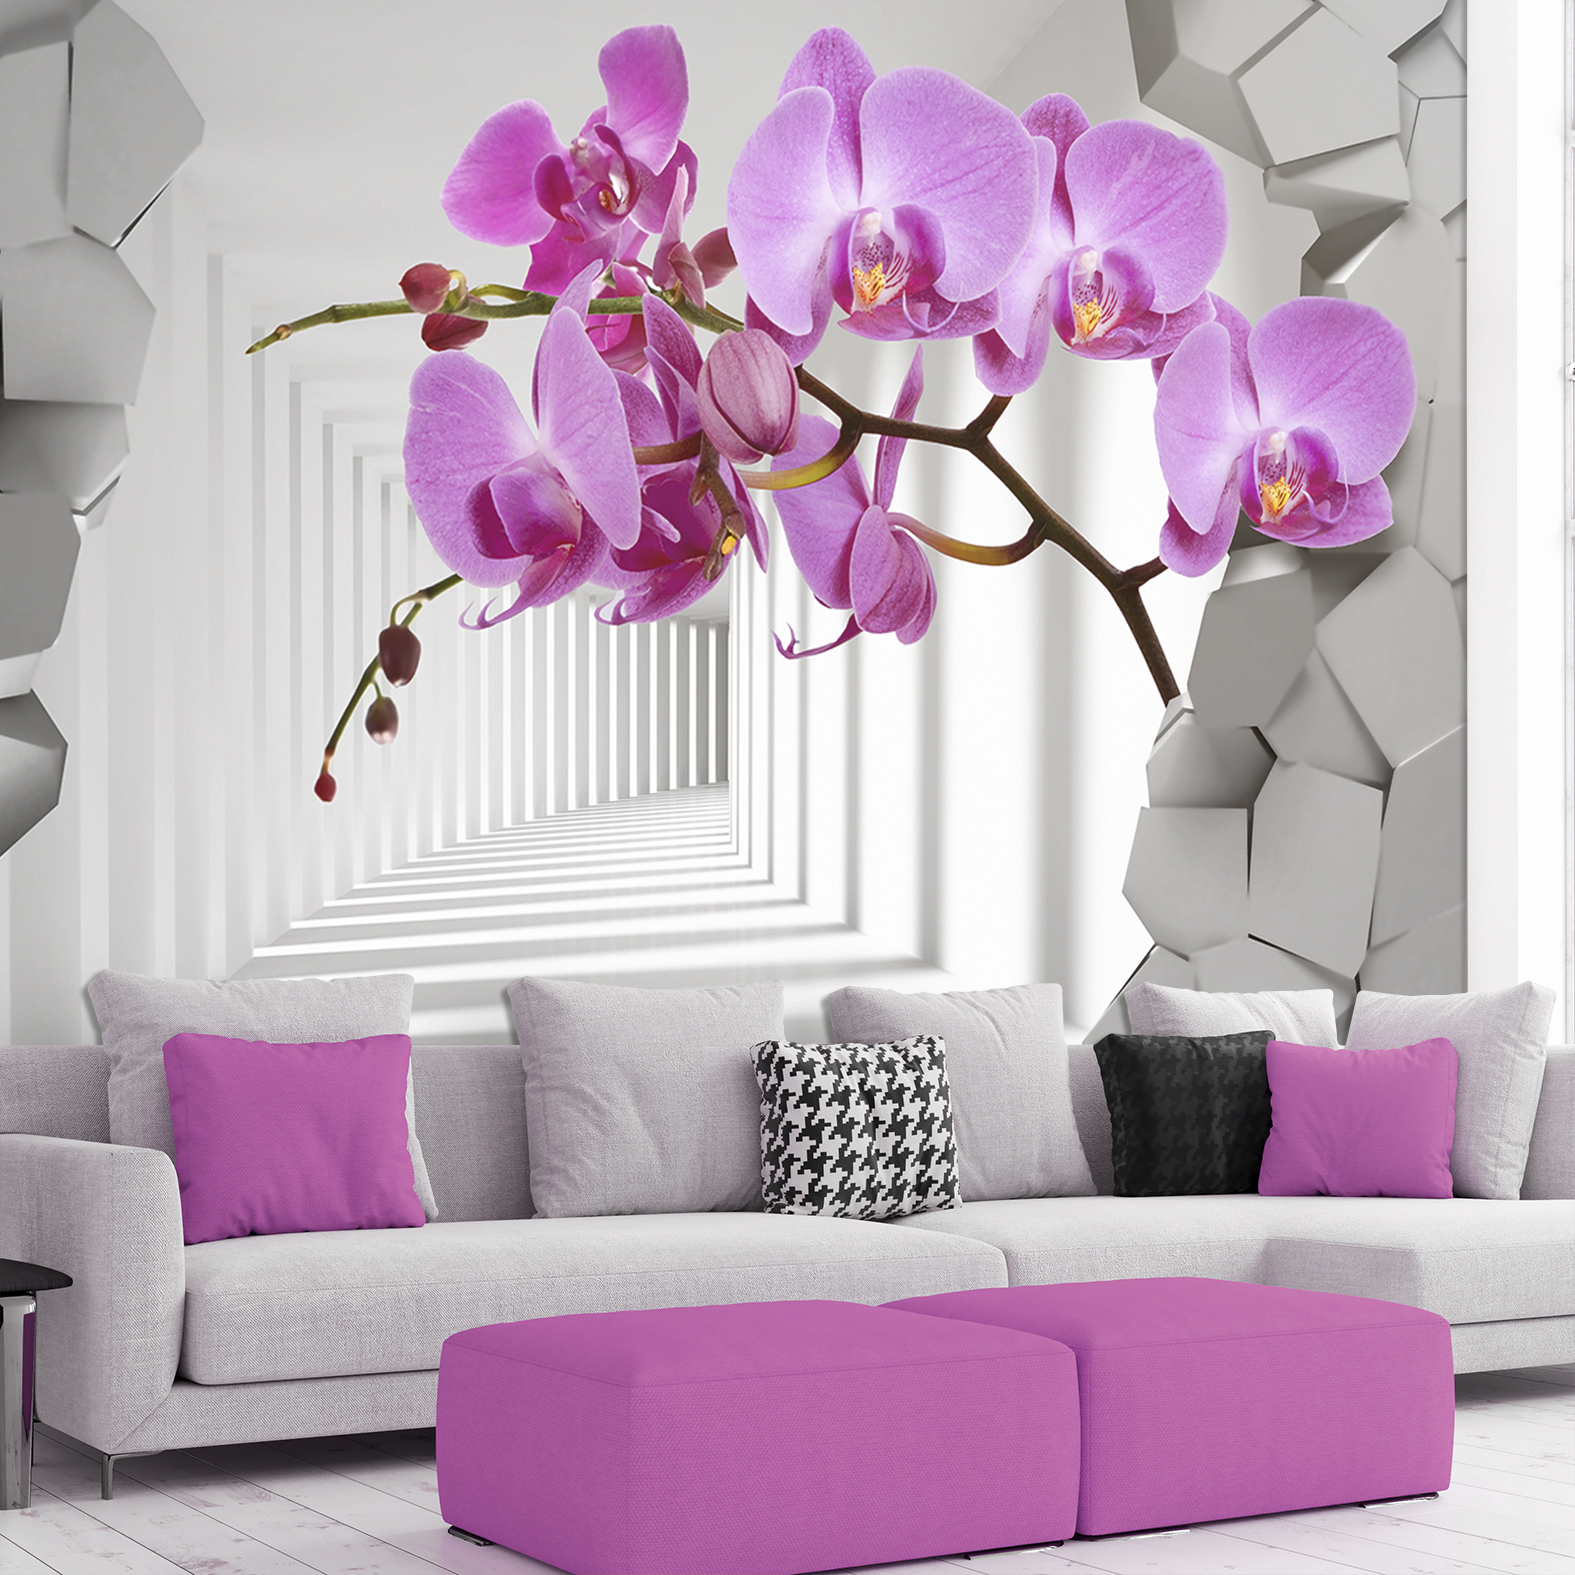 Фотообои Photostena Яркие 3D орхидеи за стеной 3,56 x 2,6 м фотообои photostena 3d арка с ветками орхидеи 1 62 x 2 5 м